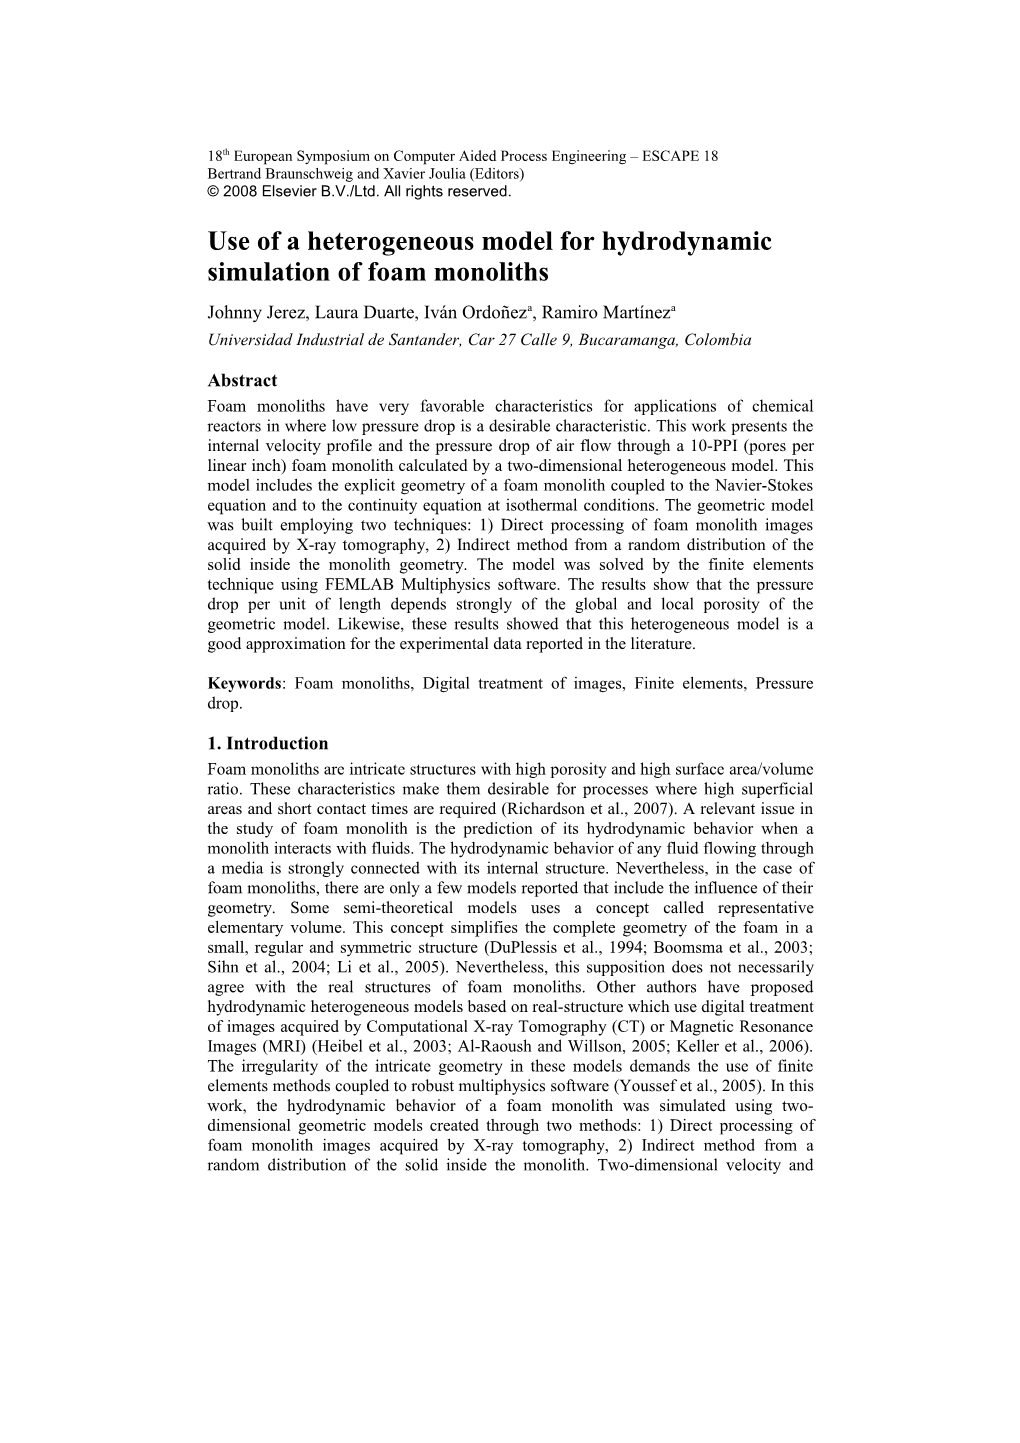 Use of a Heterogeneous Model for Hydrodynamic Simulation of Foam Monoliths